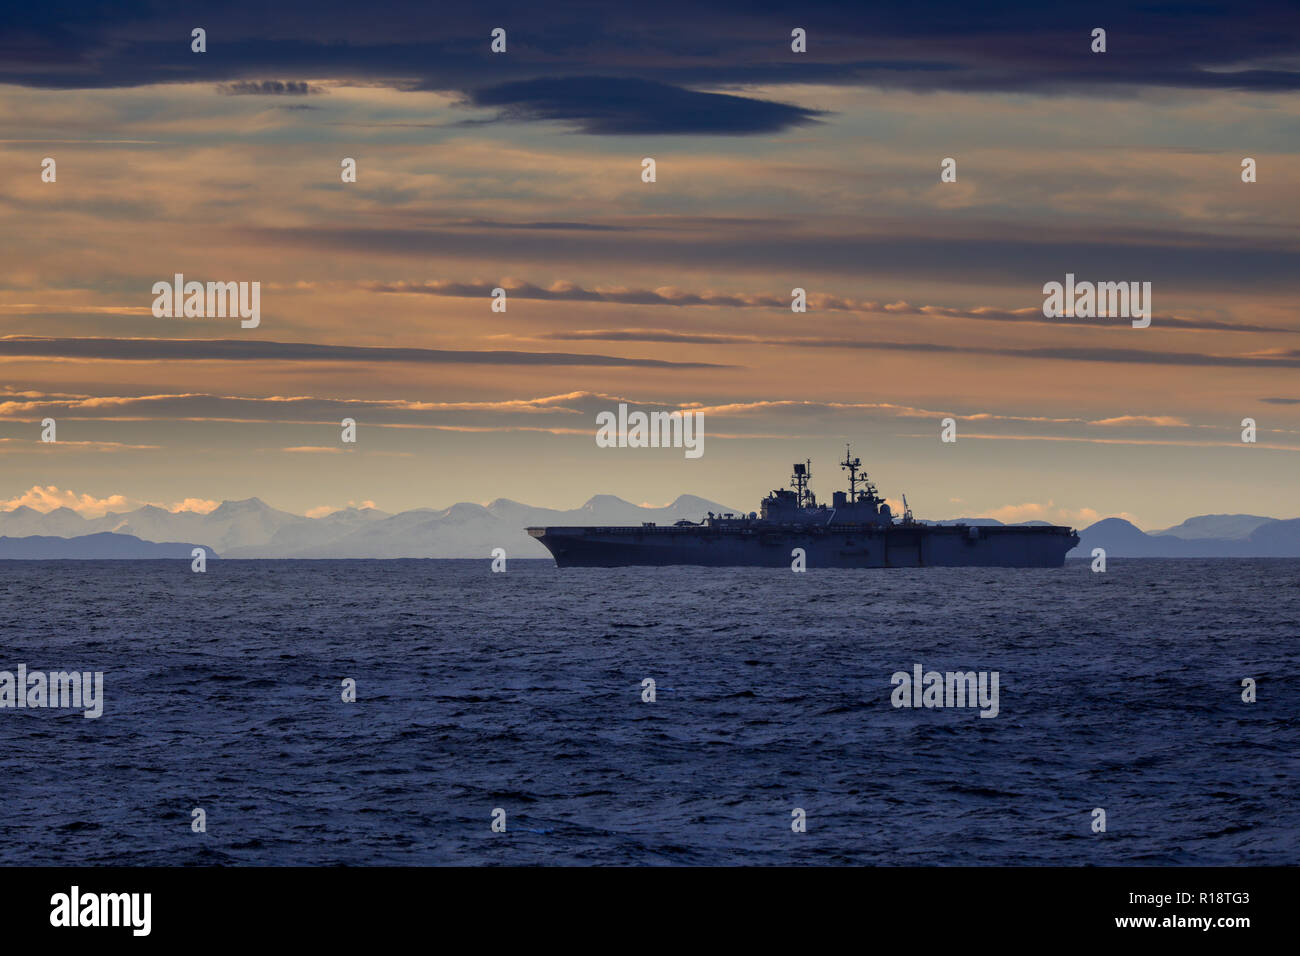 The USS Iwo Jima assault carrier of the US Navy Stock Photo